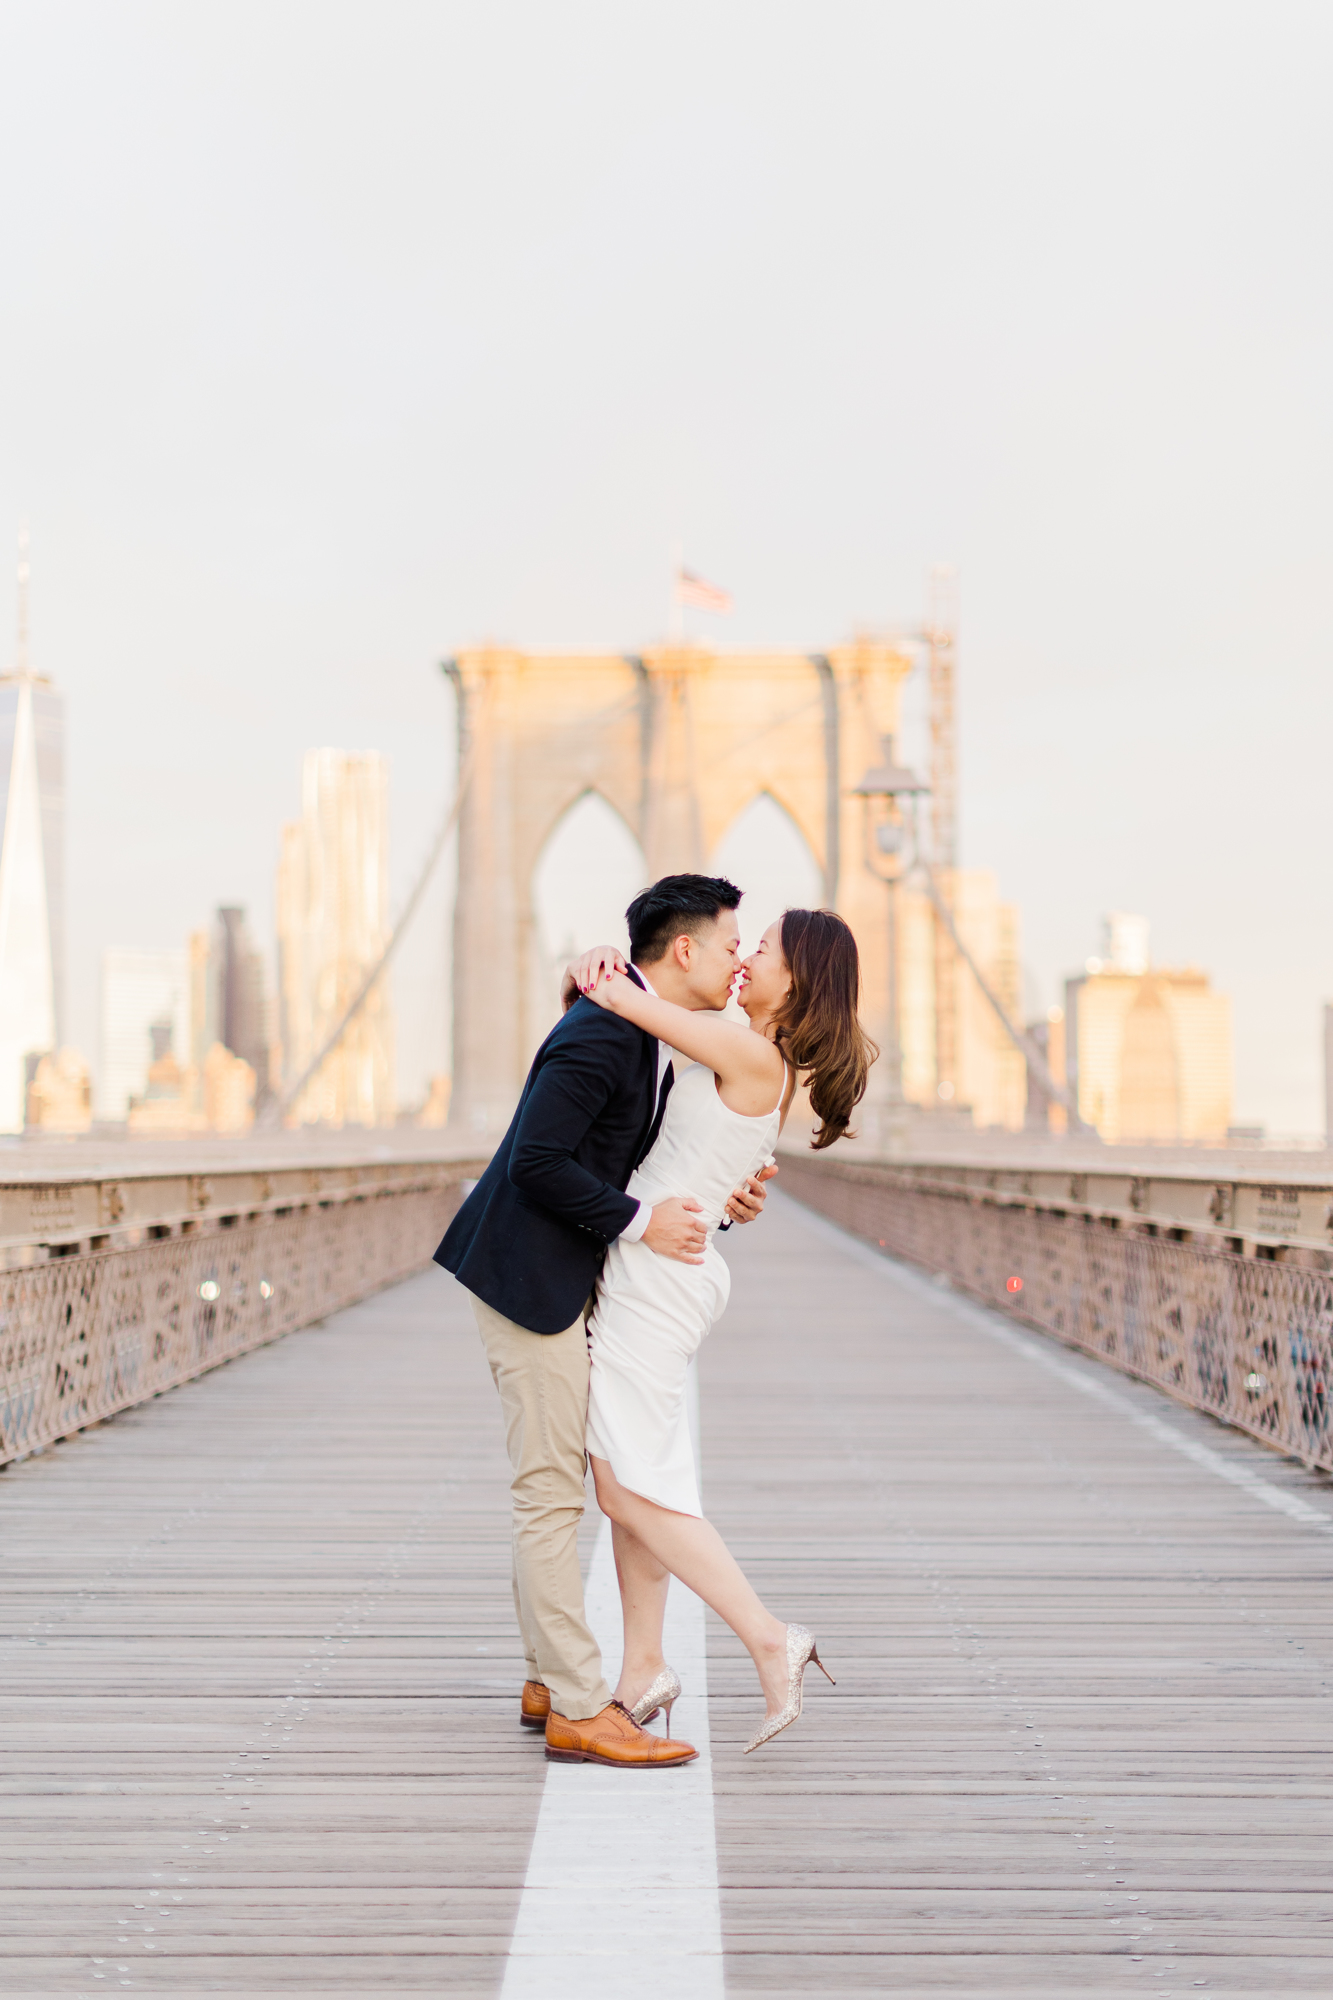 Intimate Brooklyn Bridge Engagement Photography